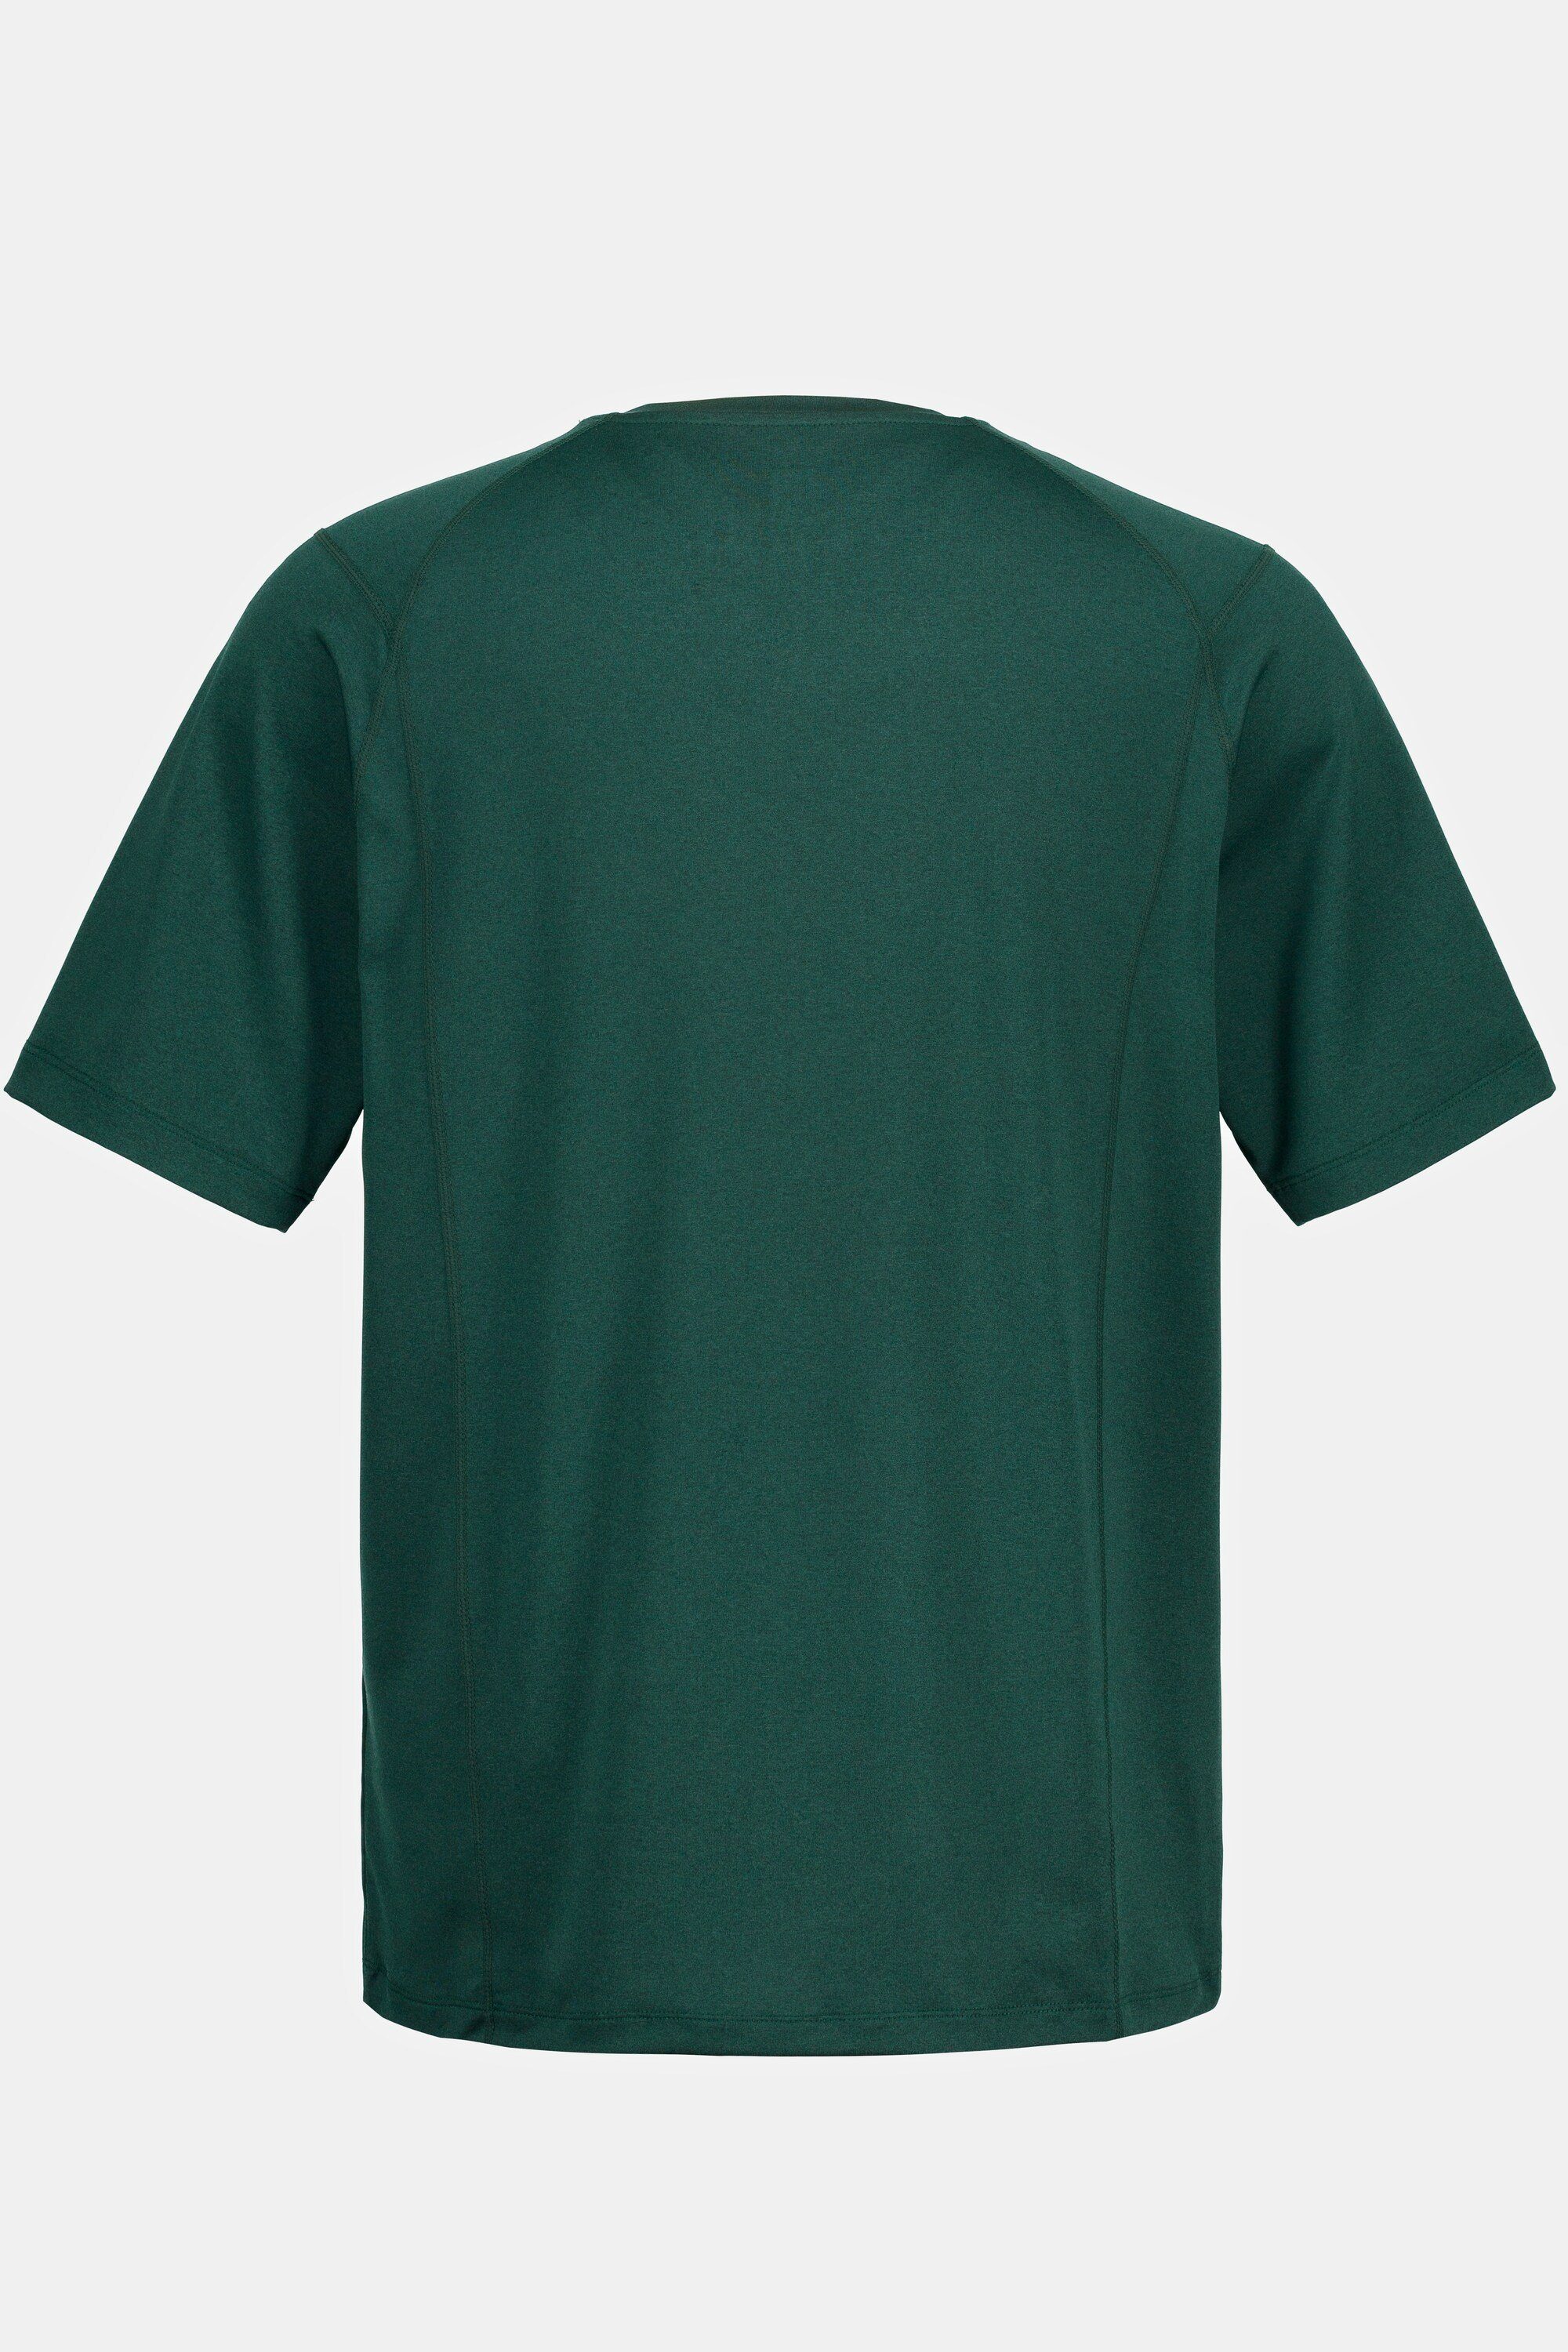 T-Shirt Funktions-Shirt Fitness Halbarm JP1880 dunkelgrün FLEXNAMIC®